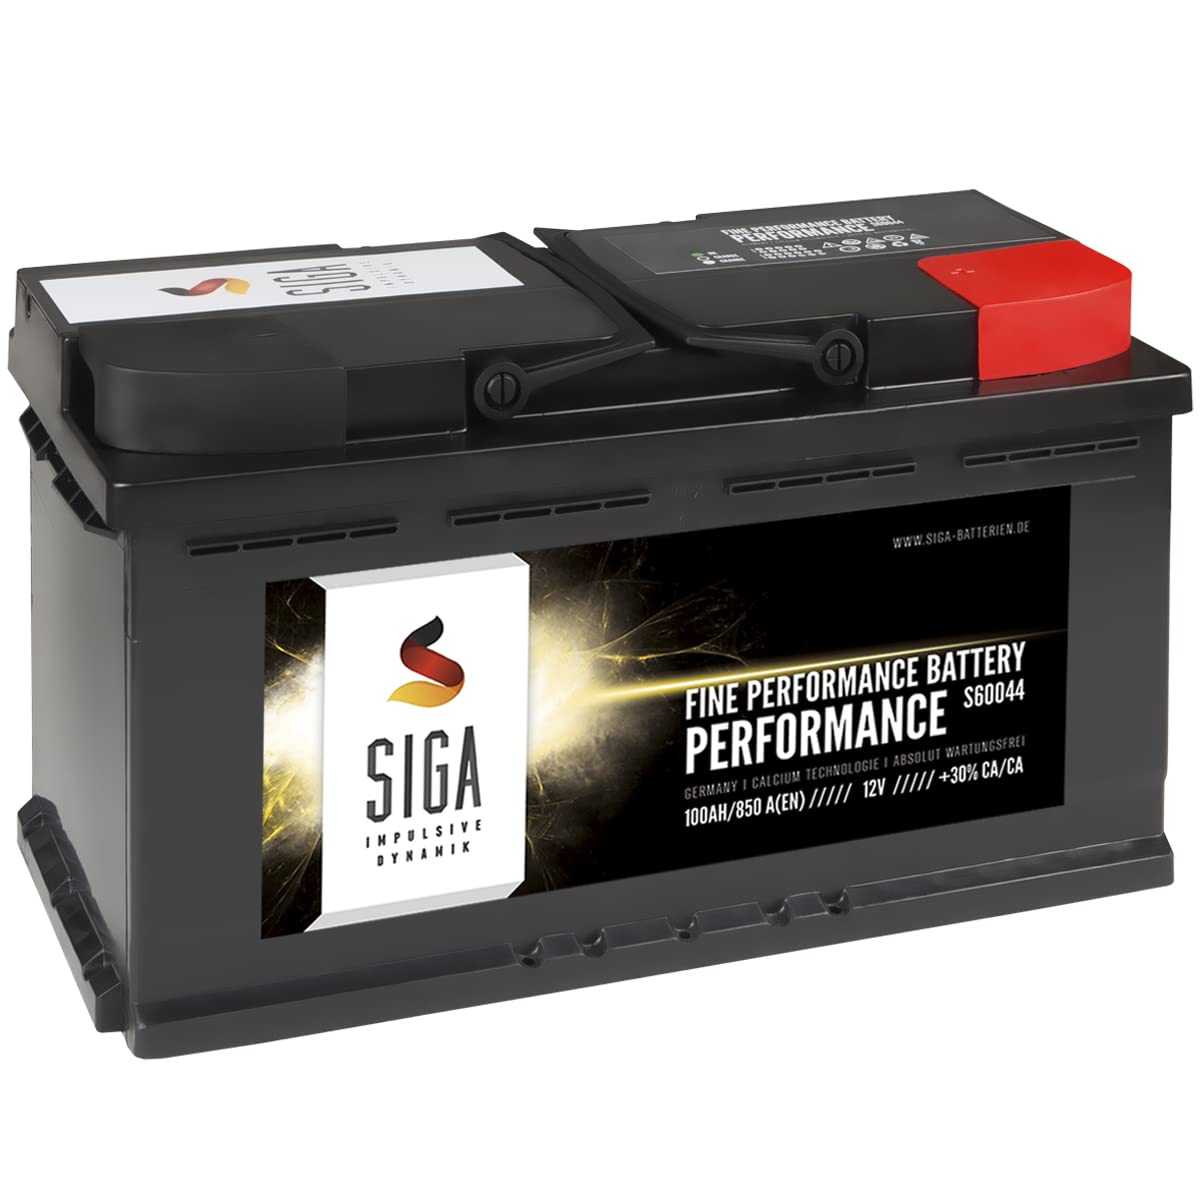 SIGA Autobatterie 100AH 12V 850A/EN Starterbatterie ersetzt Batterie 95Ah 105Ah 88Ah von SIGA IMPULSIVE DYNAMIK